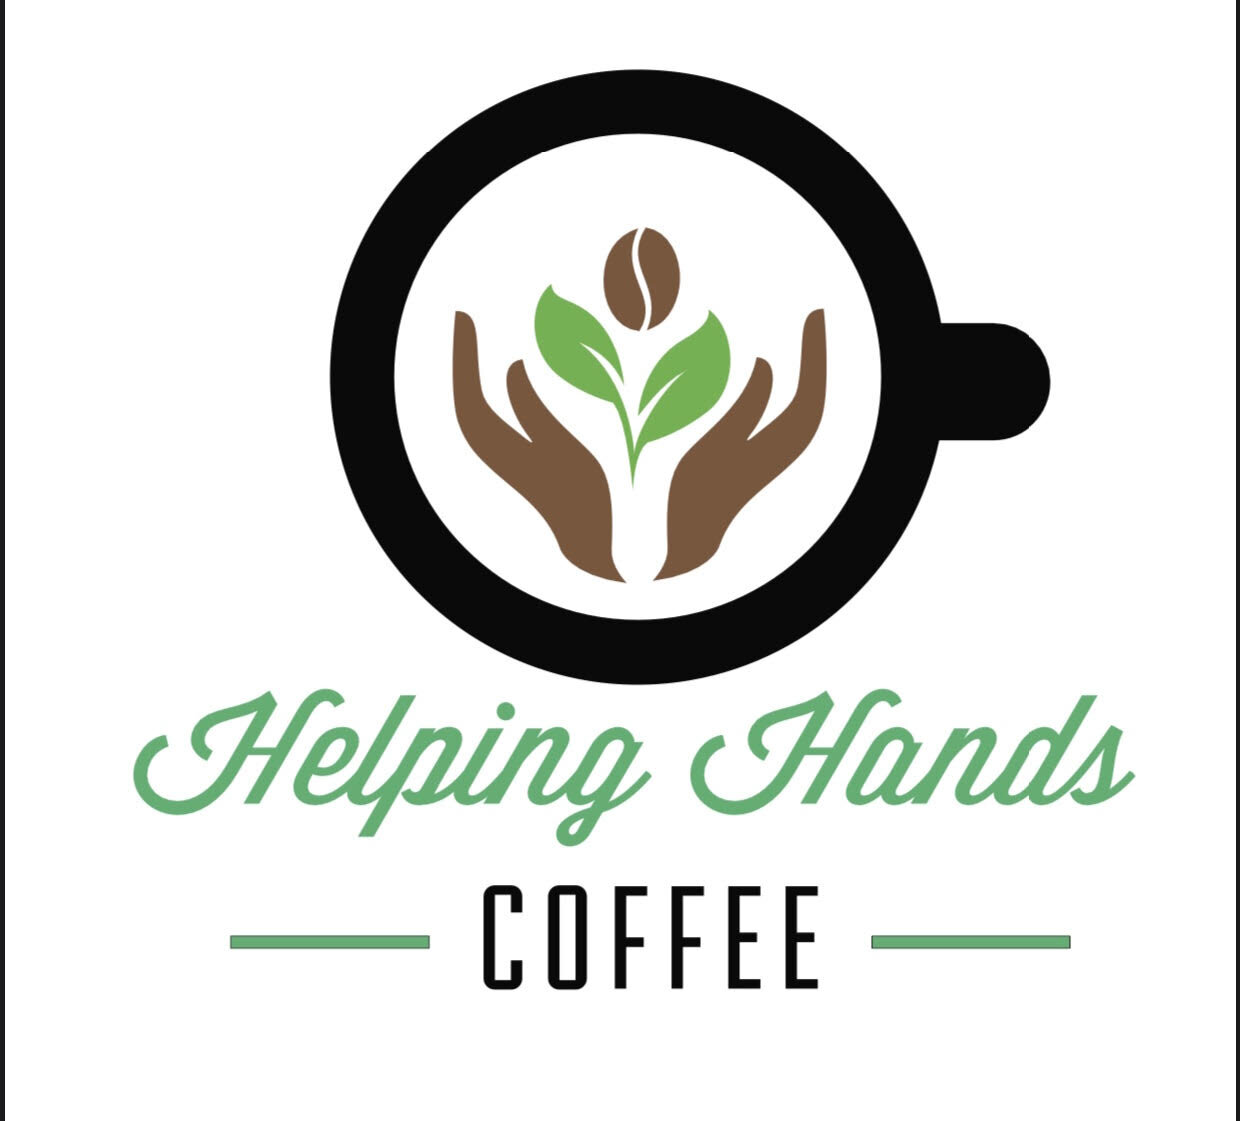 Helping Hands Coffee